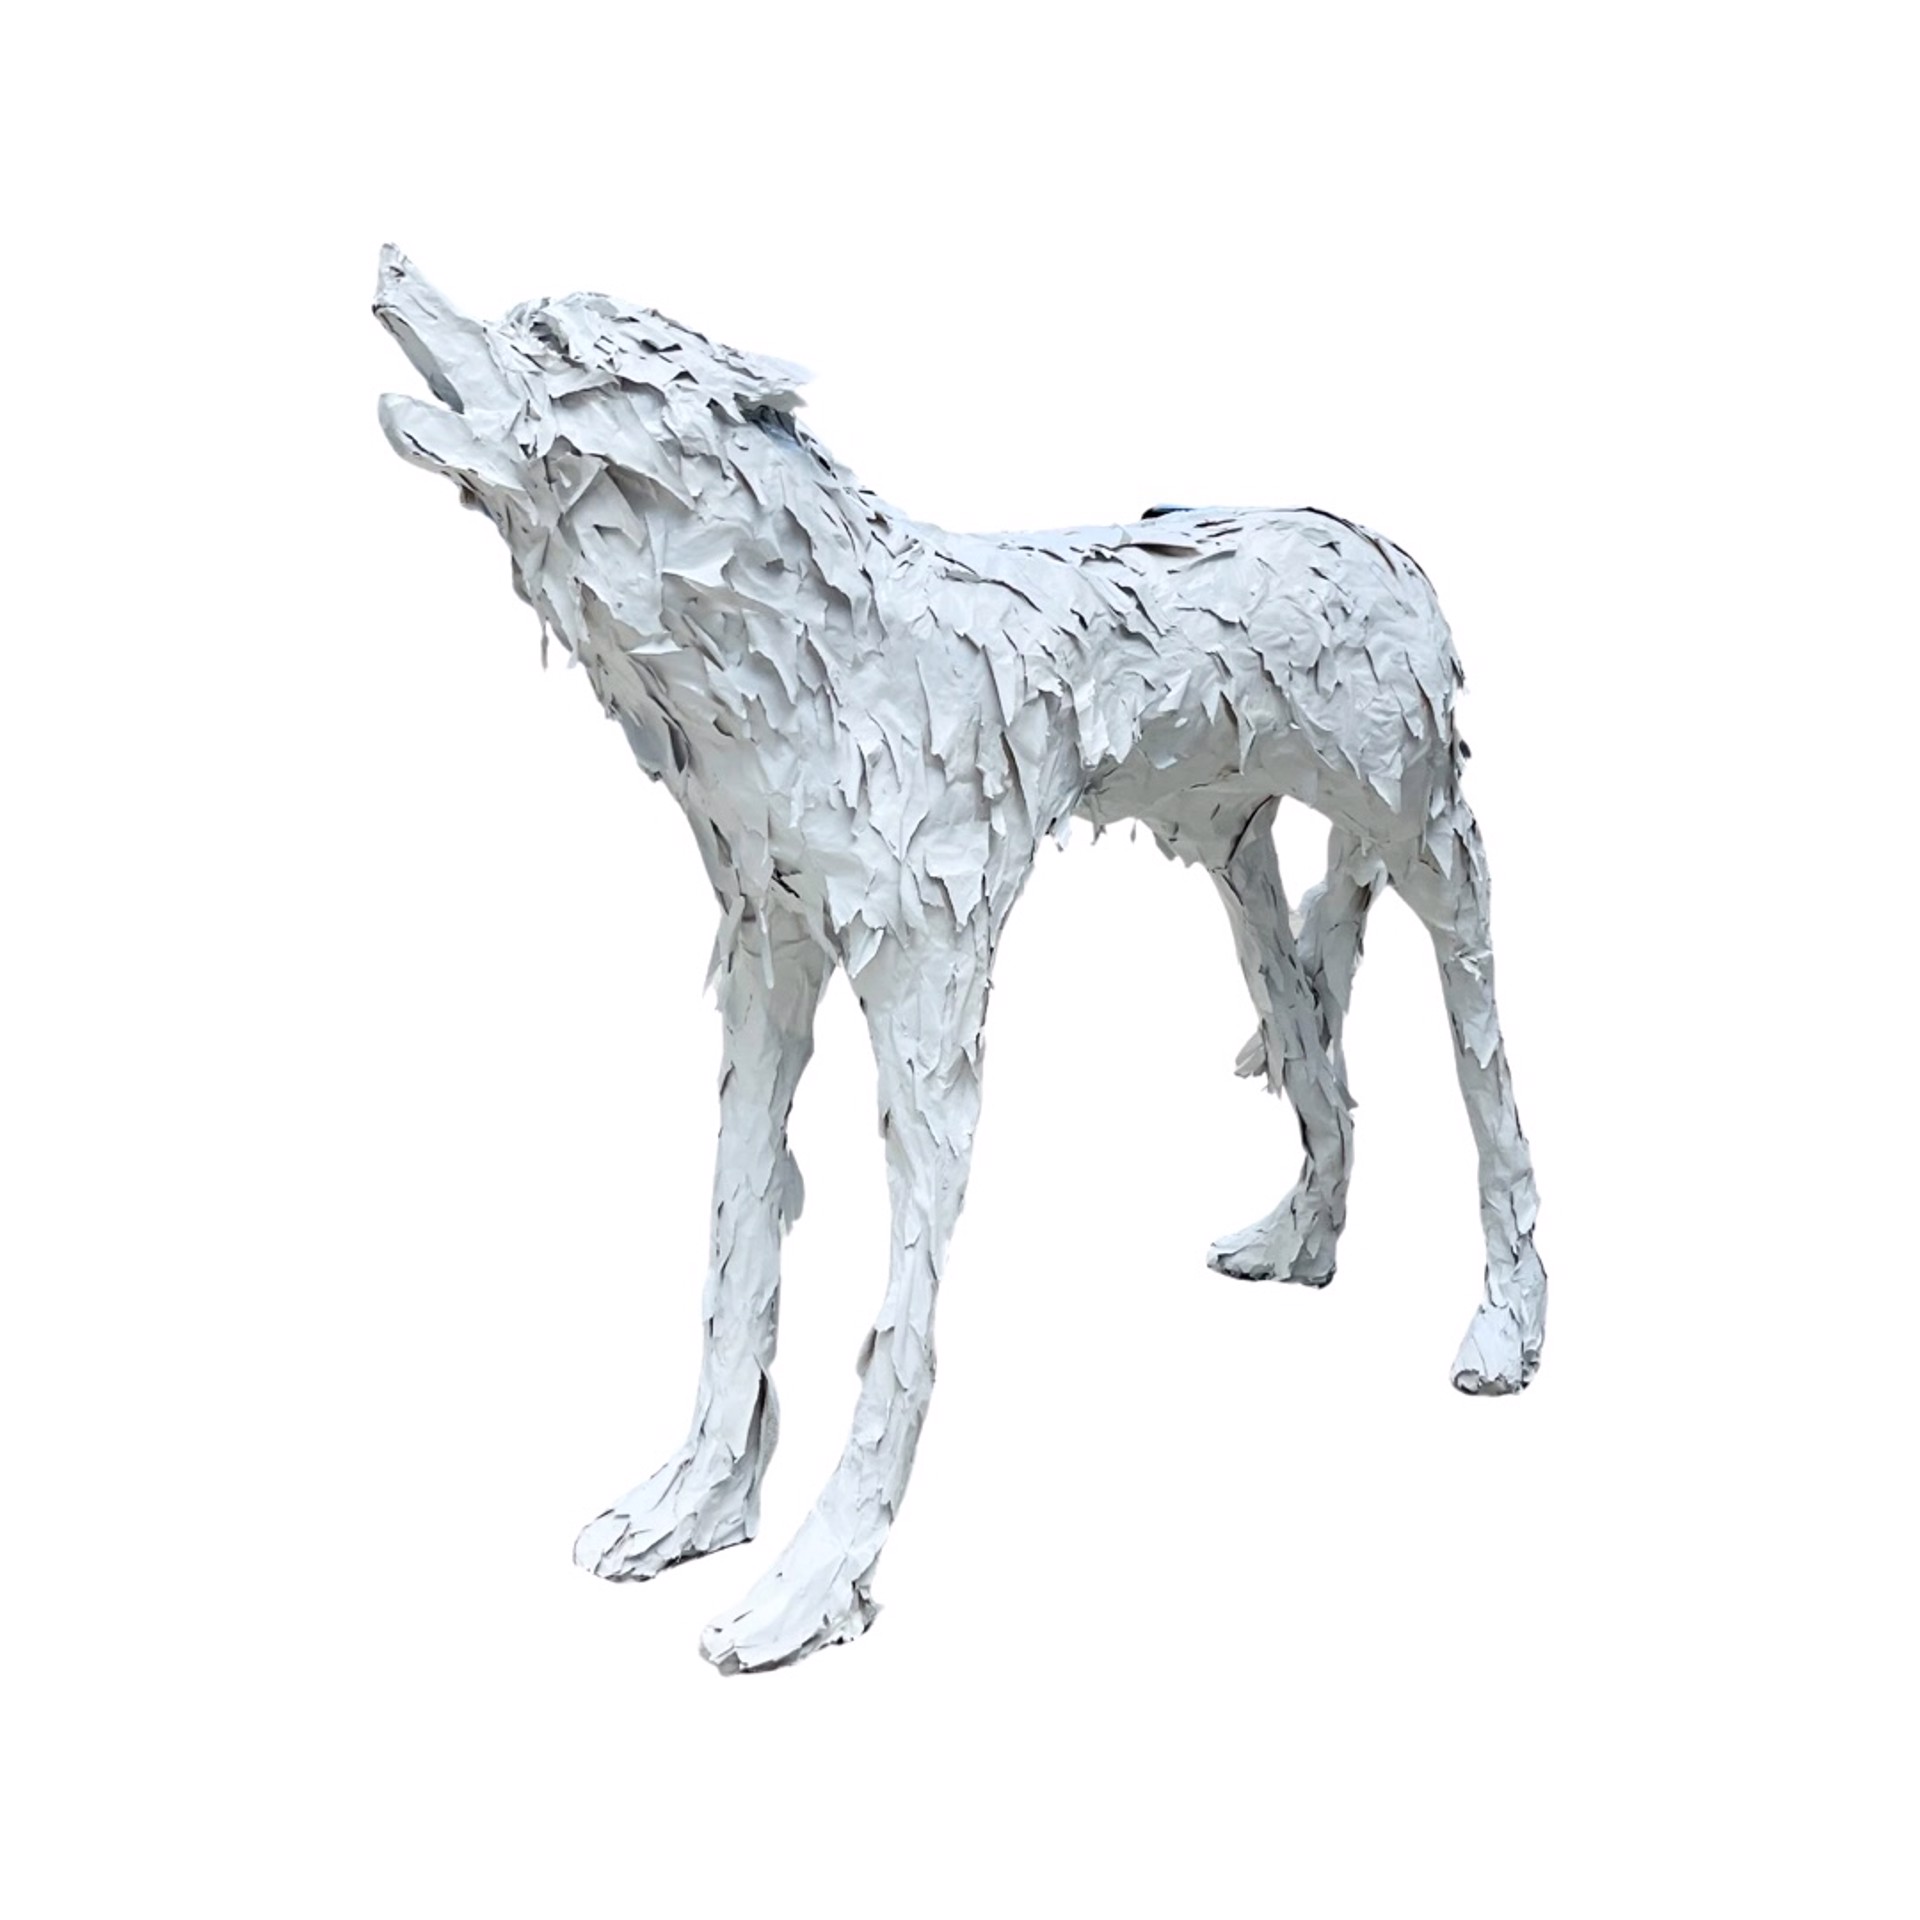 Howl IV (standing wolf) by Rachel Gardner